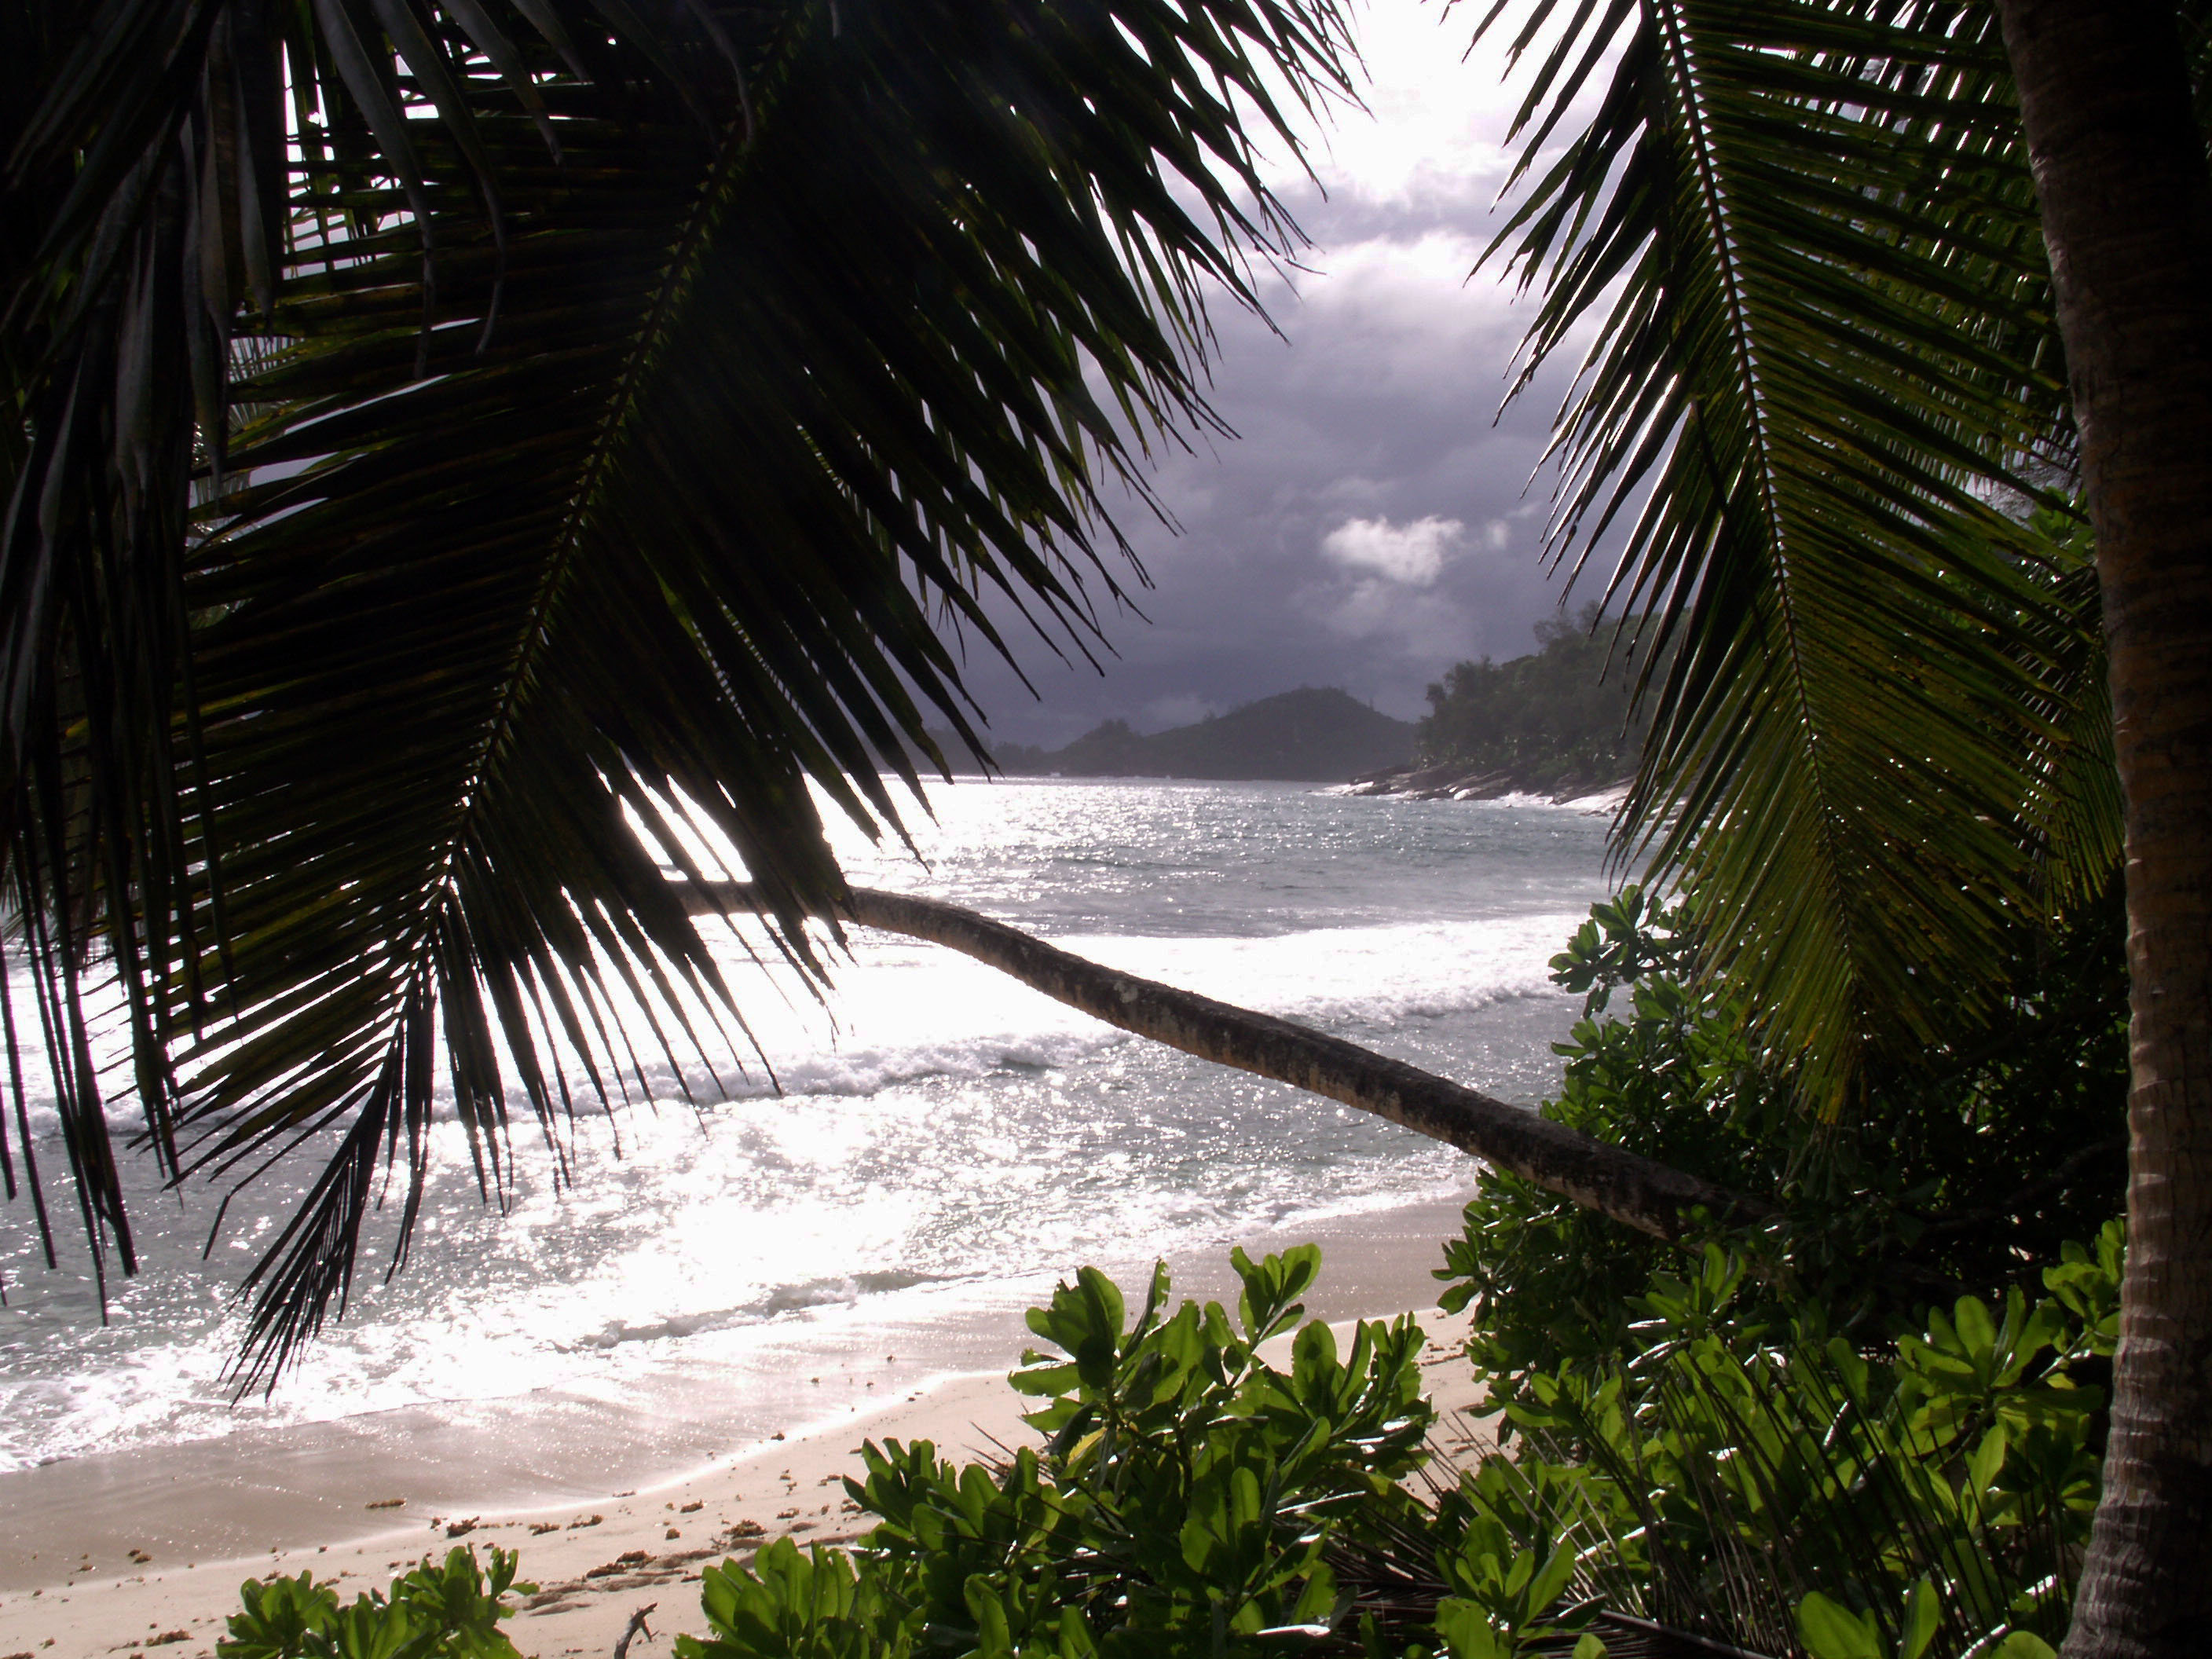 Seychellen 